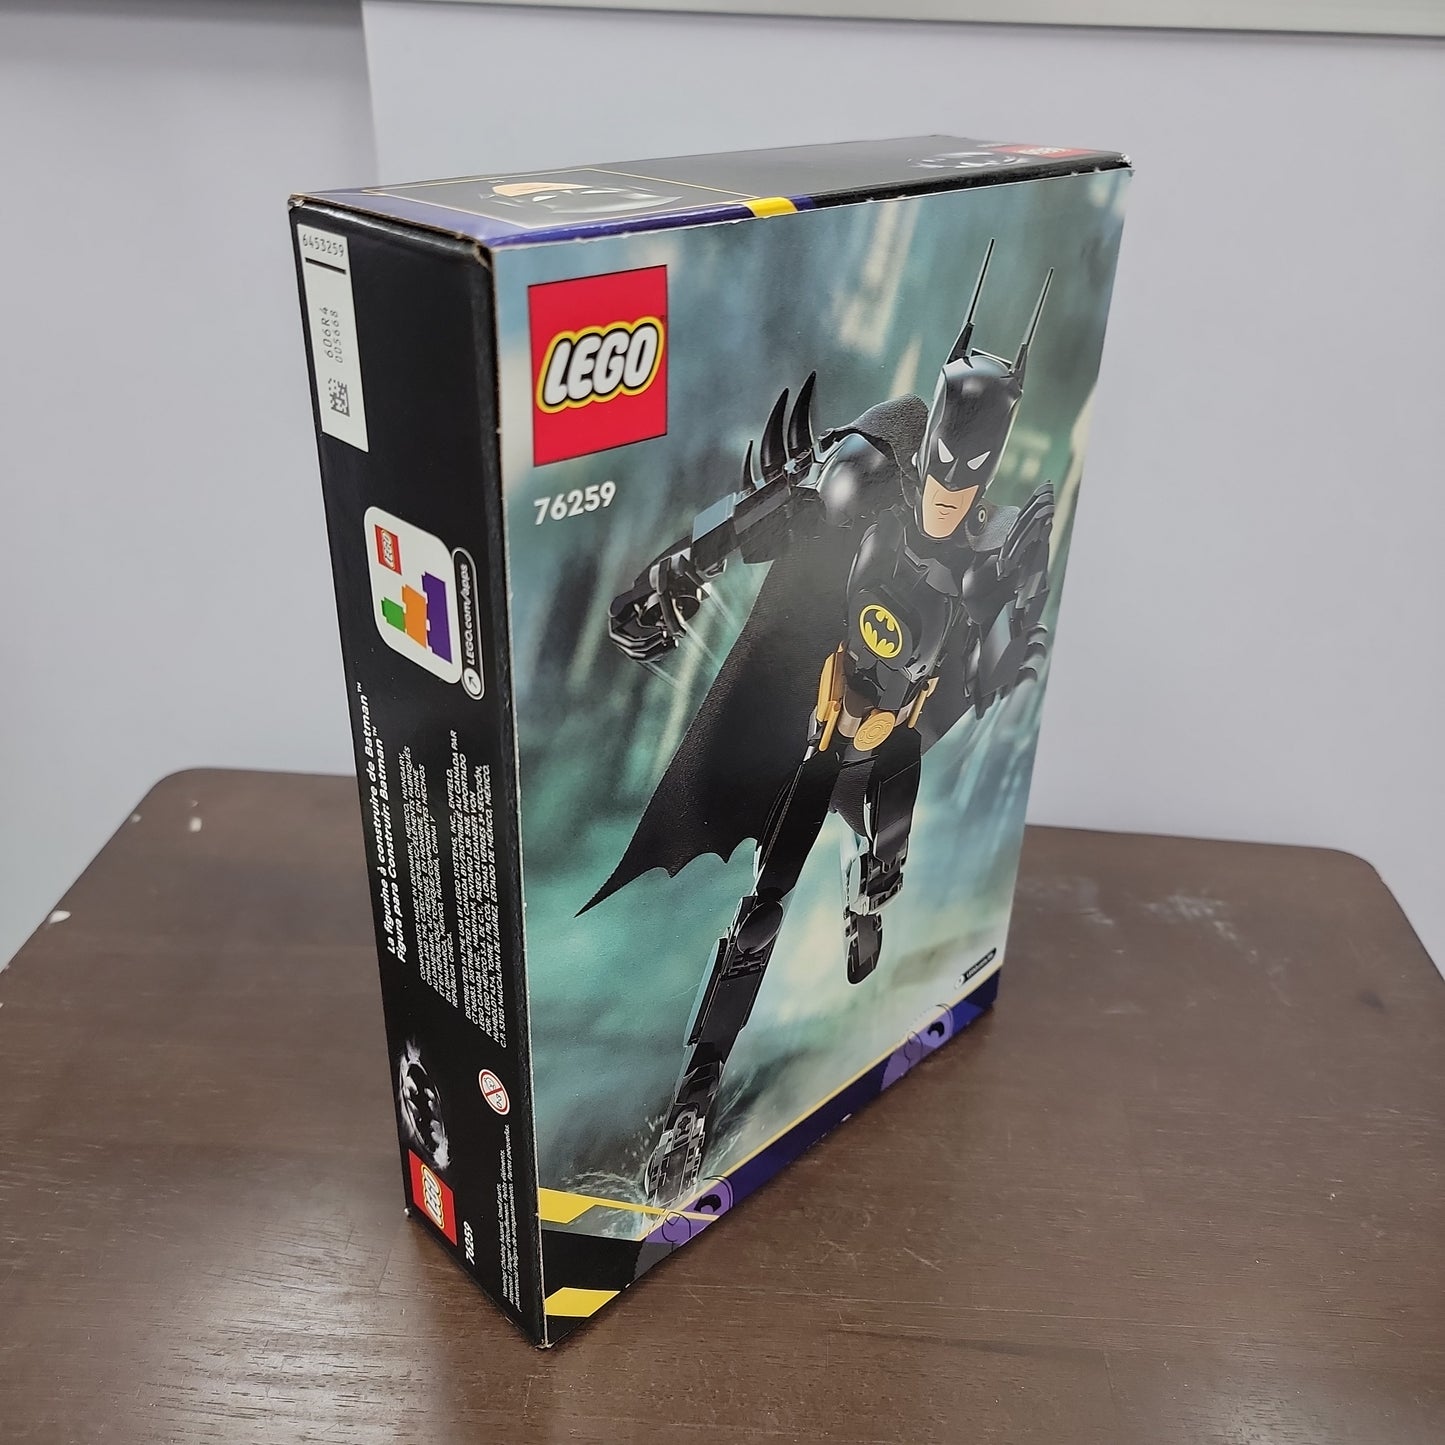 Batman Construction Figure Lego Set